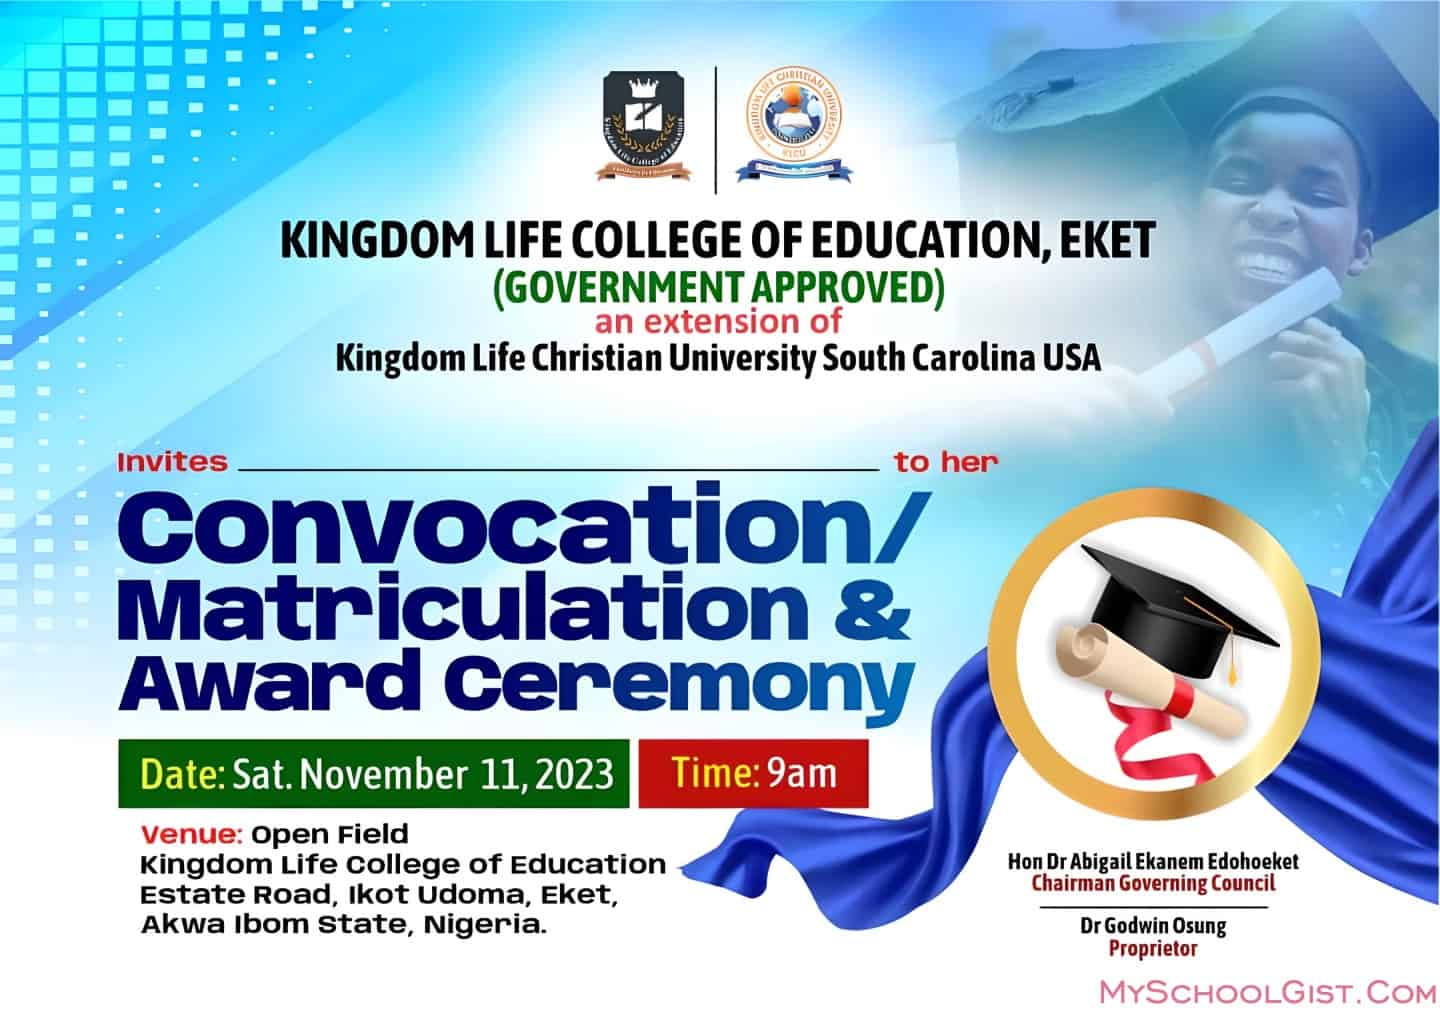 Kingdom Life College of Education convocation-matriculation